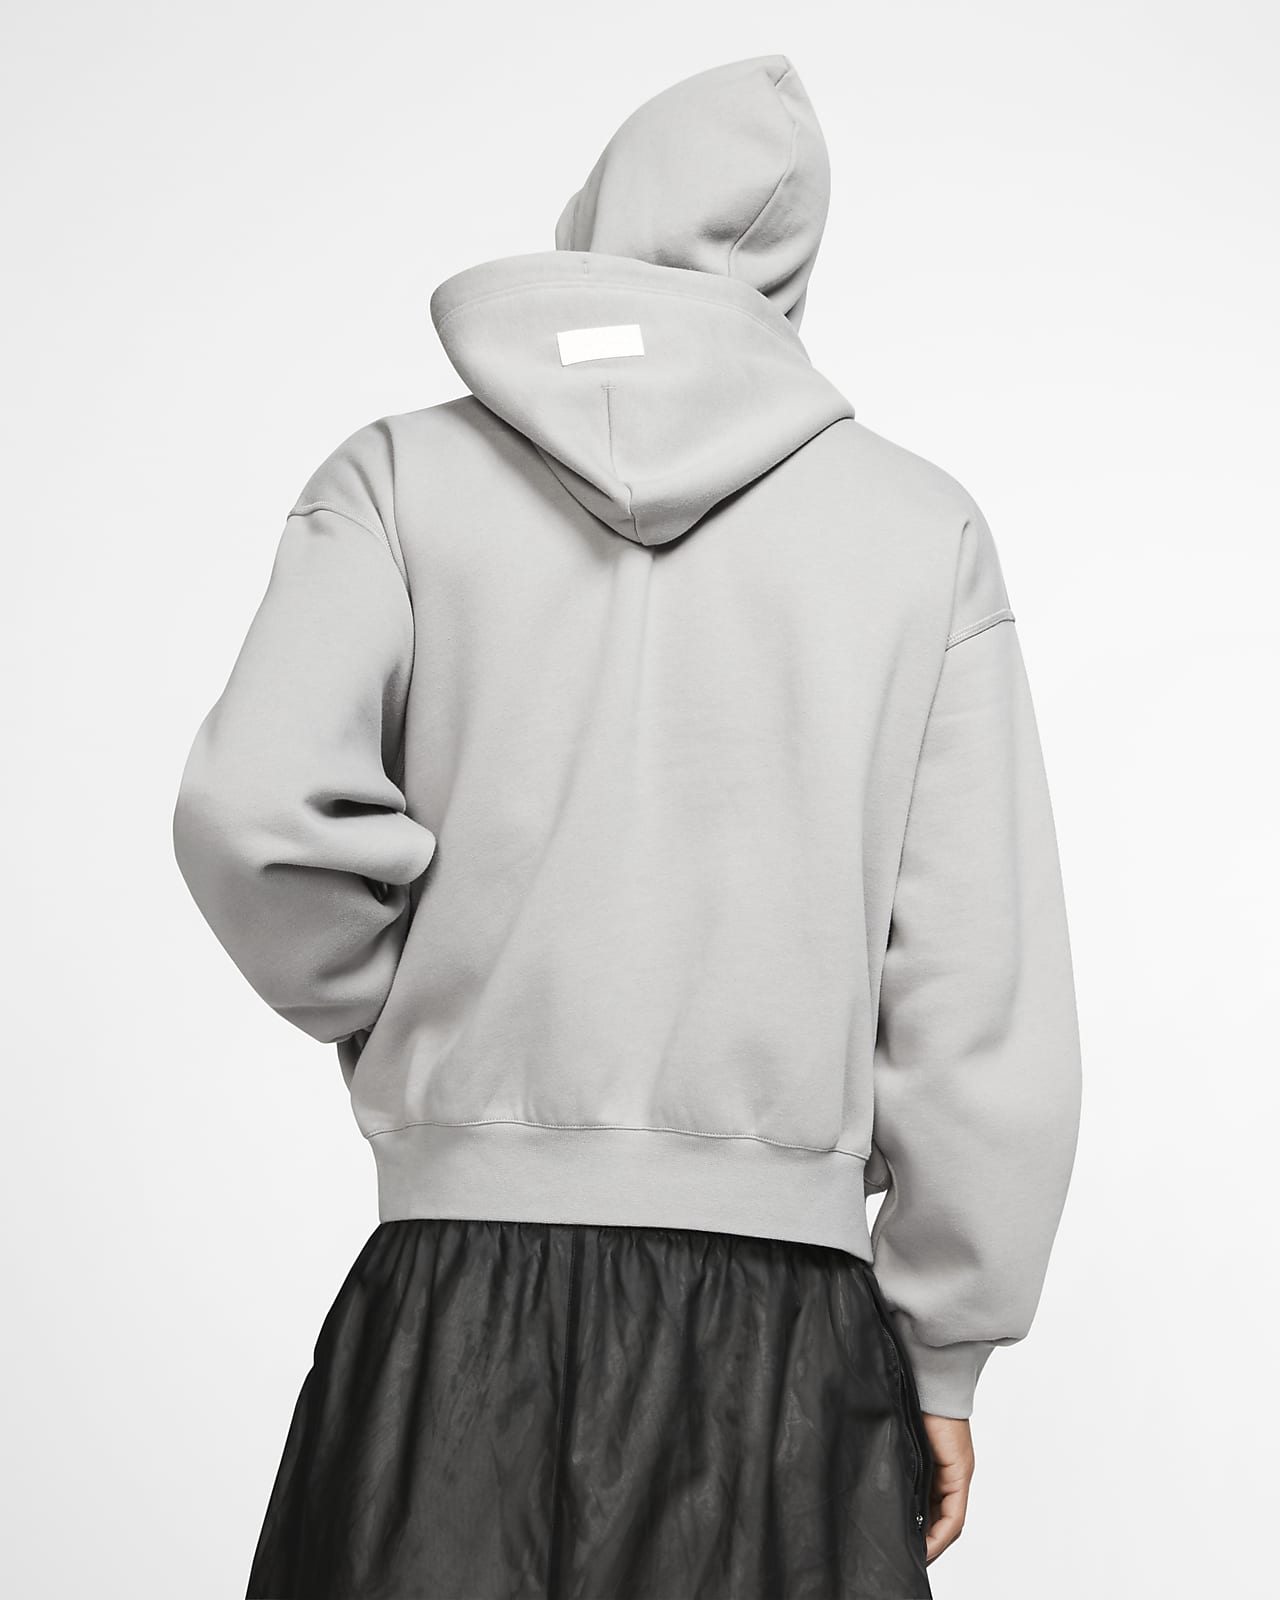 Nike×fear of god fog  logo  hoodie